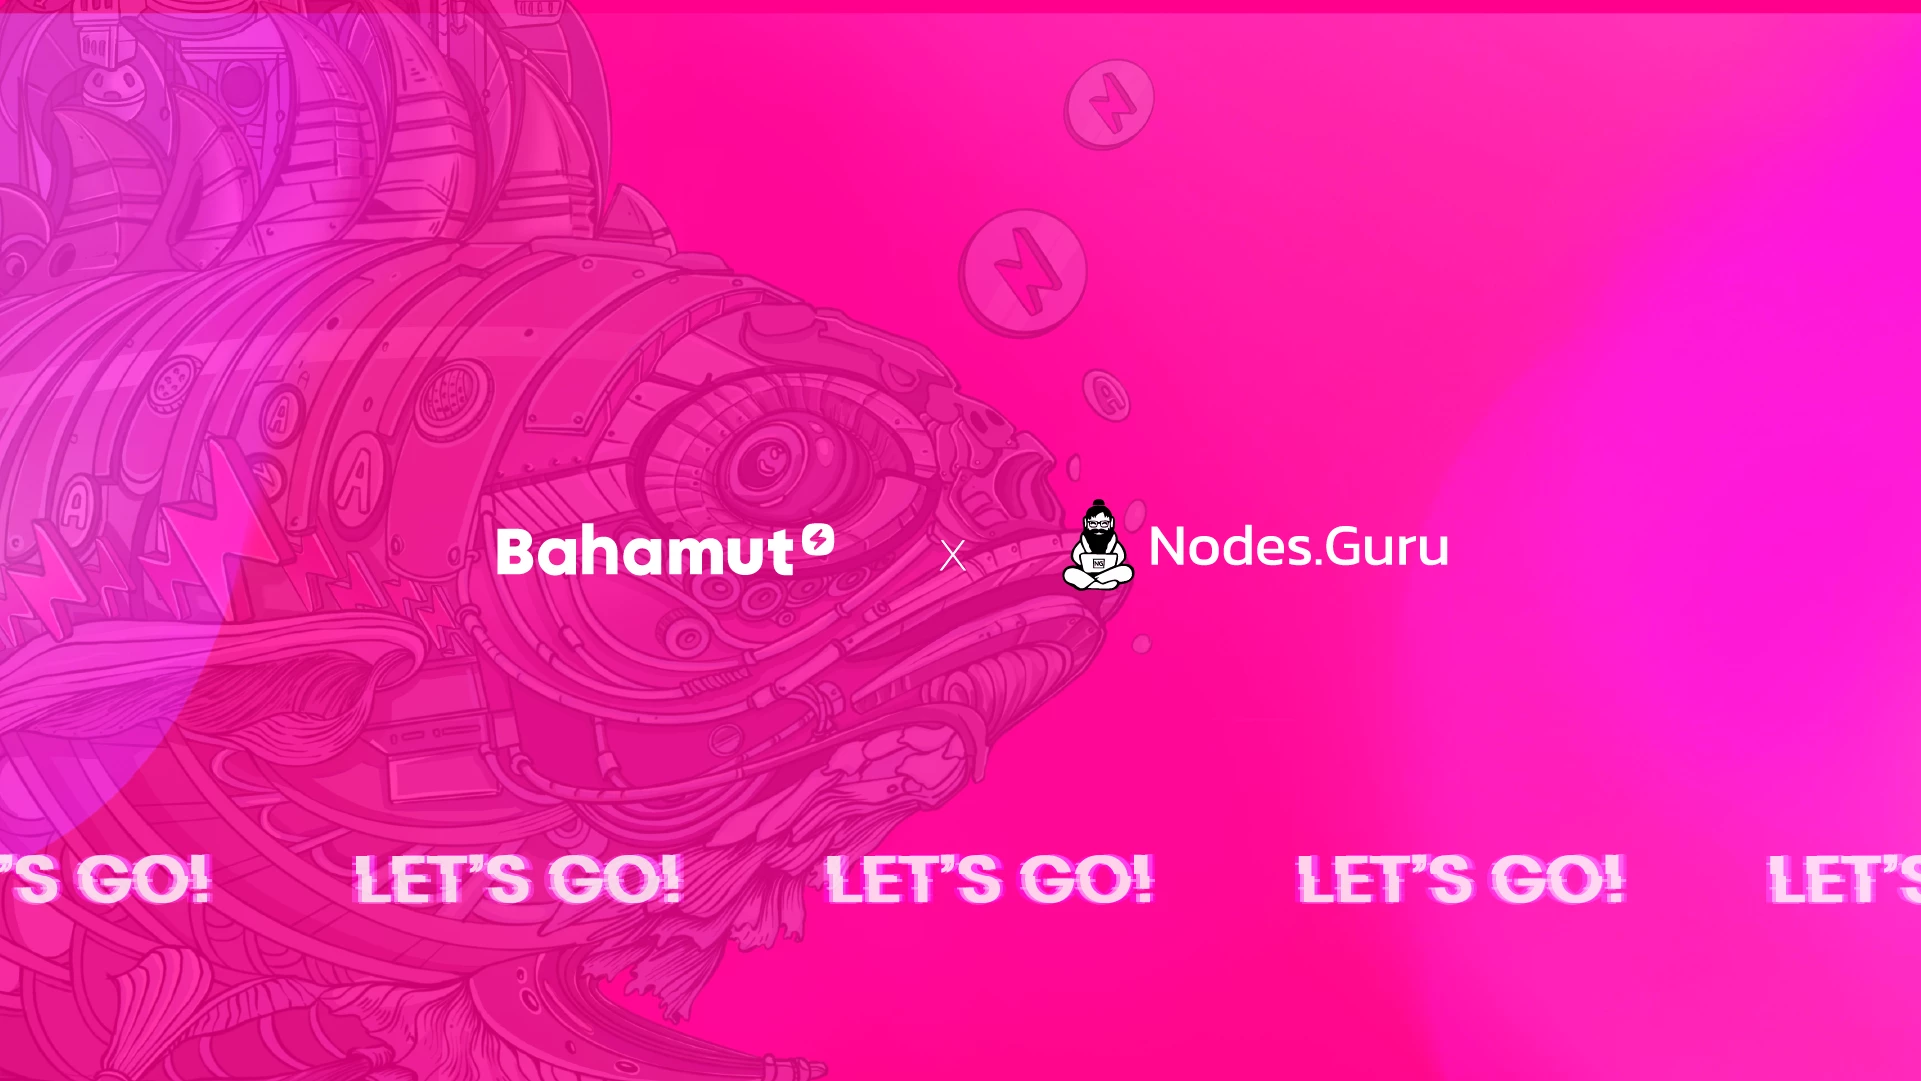 Bahamut embarks on a new partnership with Nodes.Guru